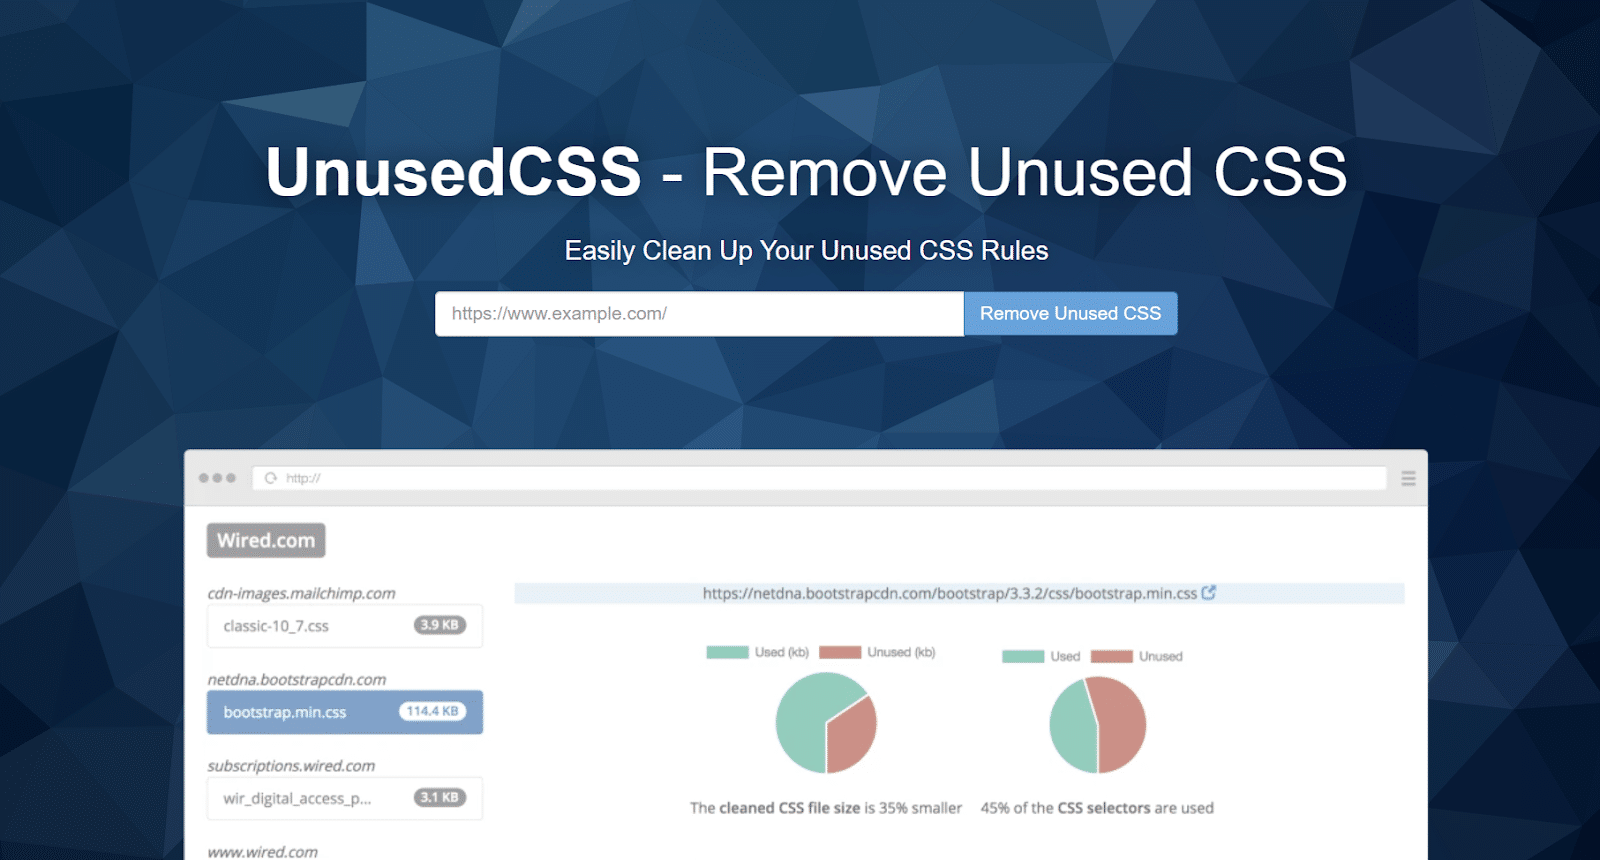 UnusedCSS homepage
